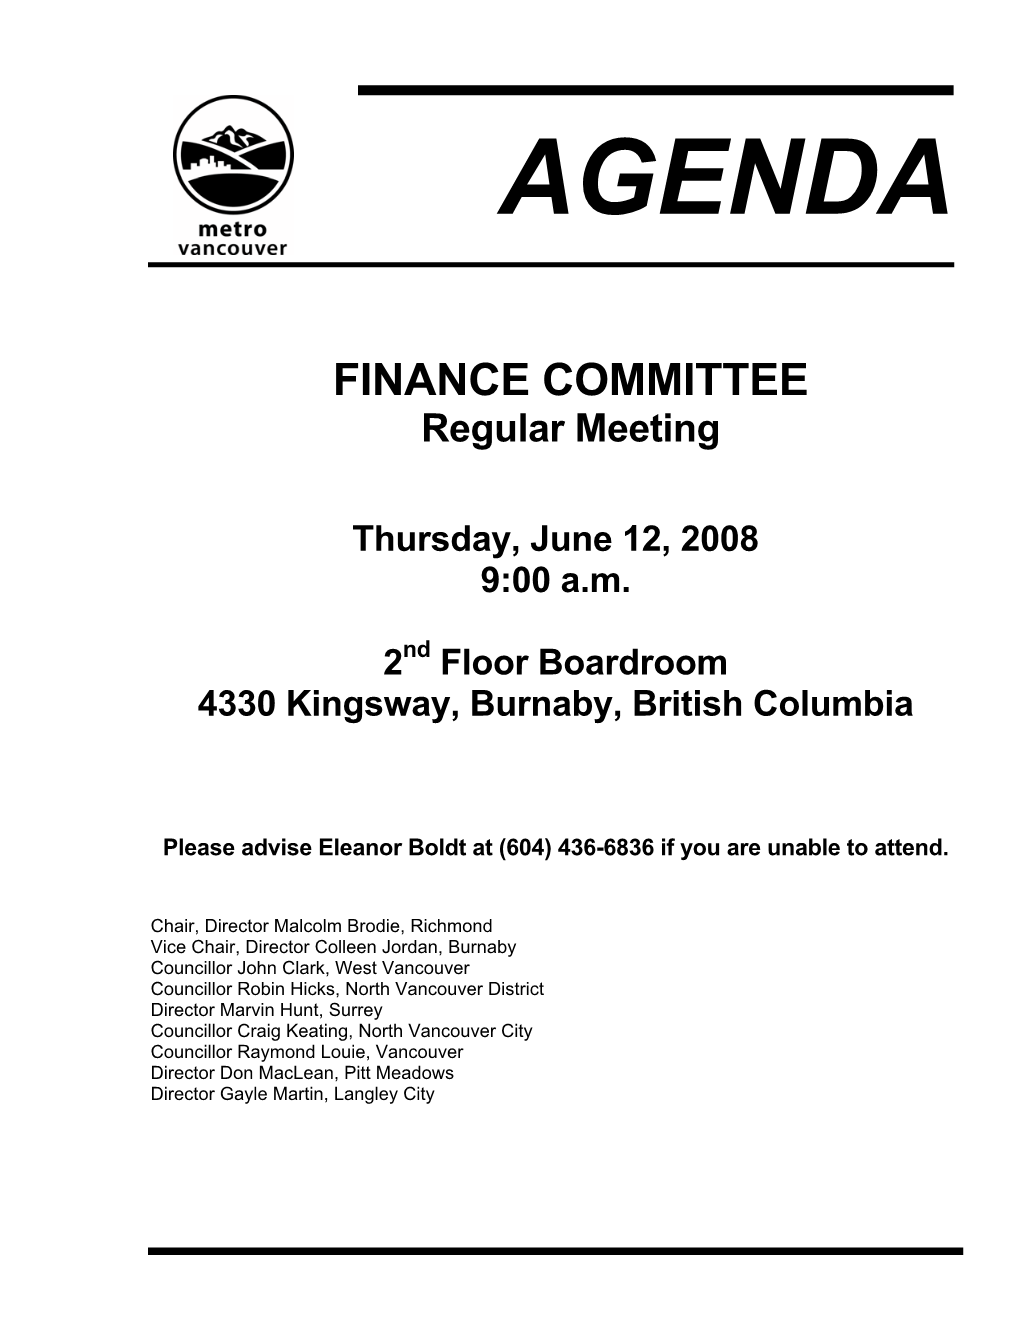 Finance Committee Agenda June 12, 2008